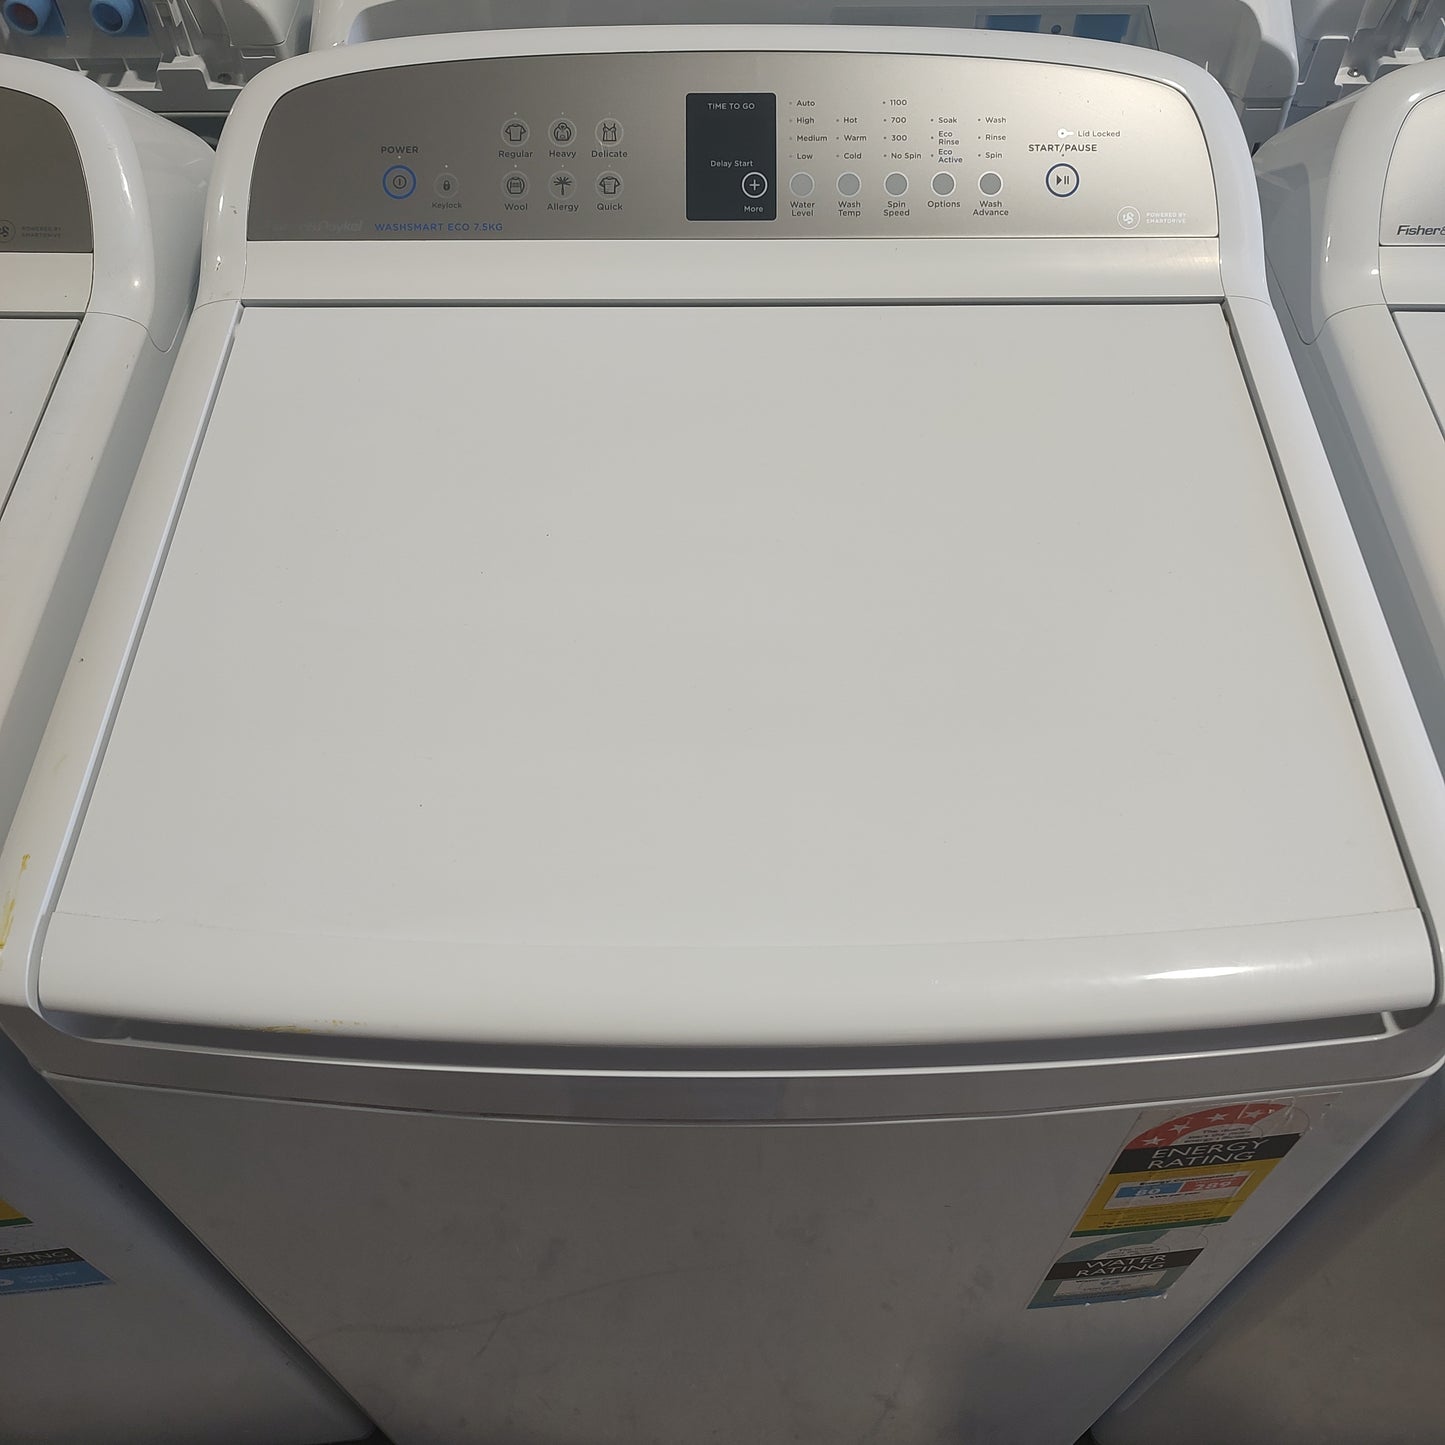 Fisher & Paykel 7.5 kg WashSmart Top Load Washing Machine WA7560E1